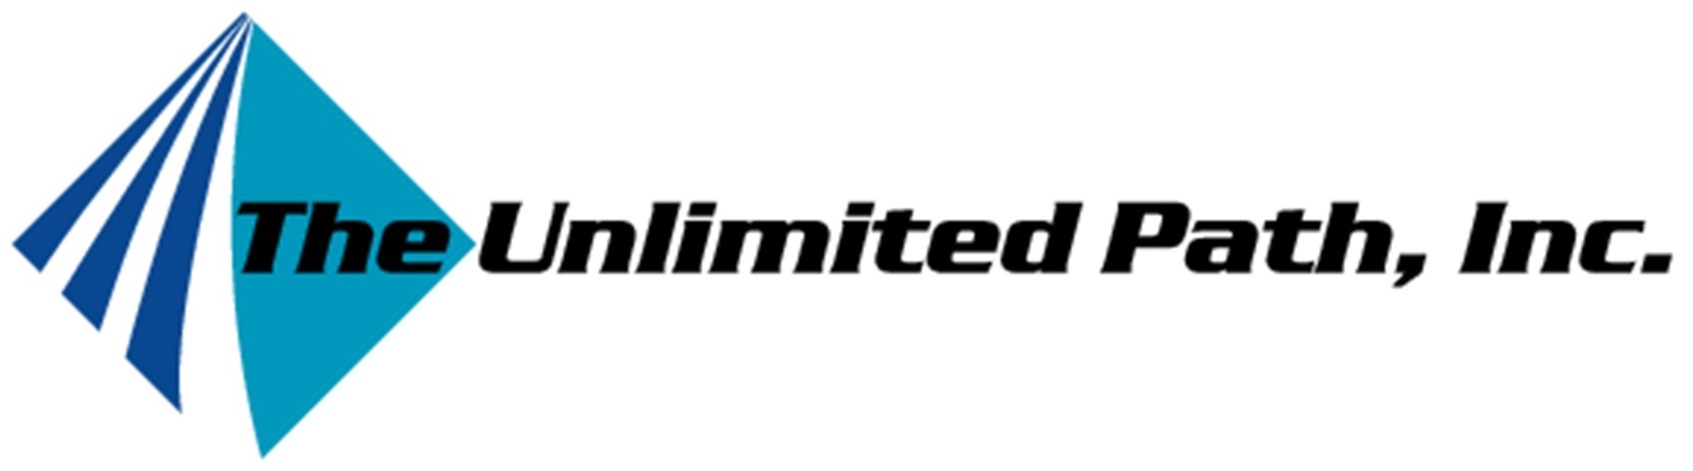 Unlimited_Logo.jpg